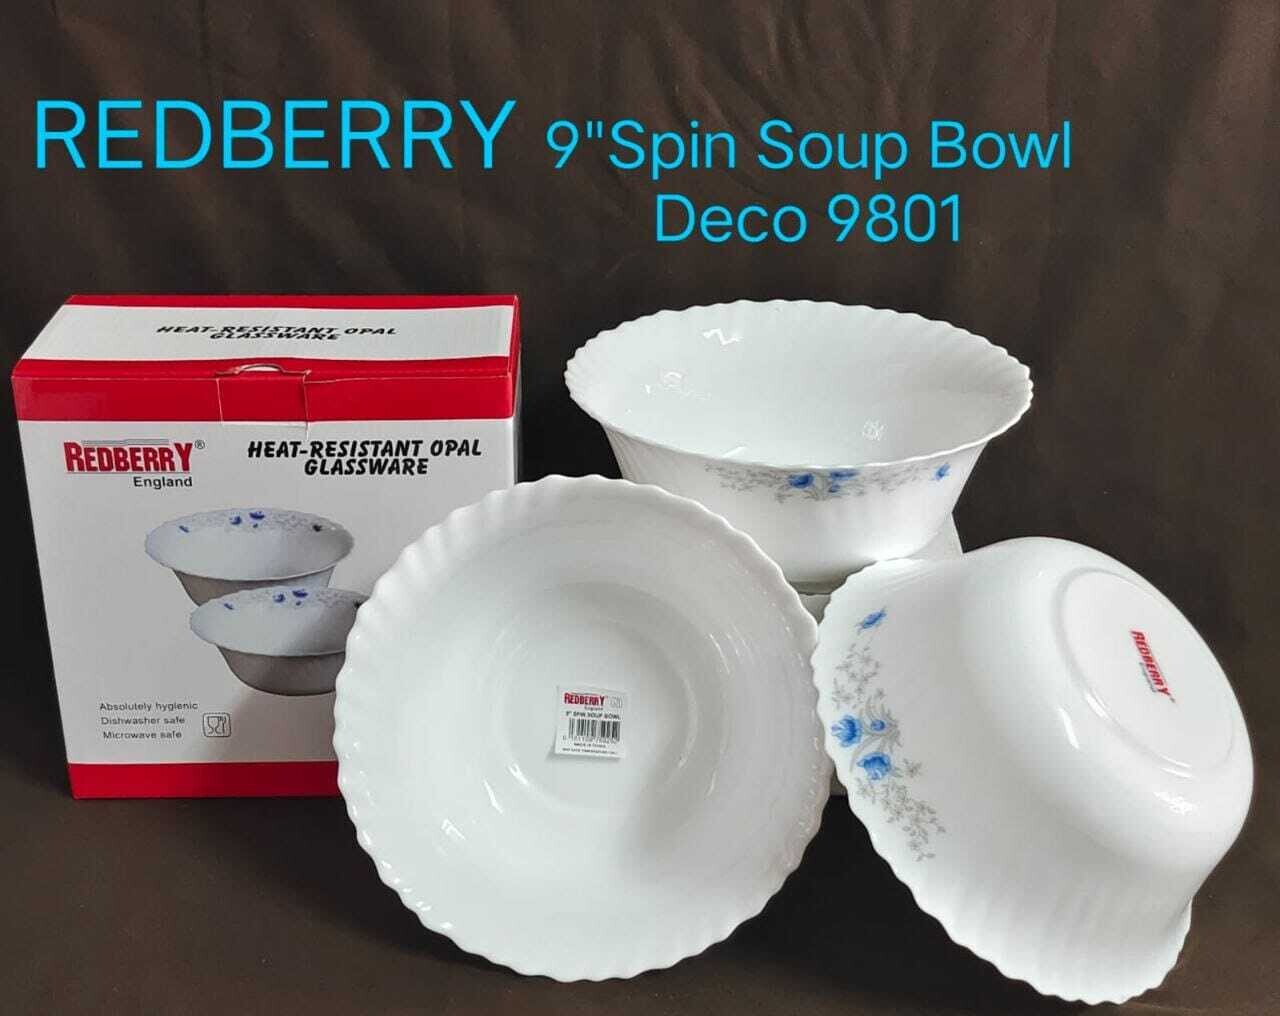 Serving bowls opal glass bowls 3pcs 9inches Redberry premium range #9801 spin bowl